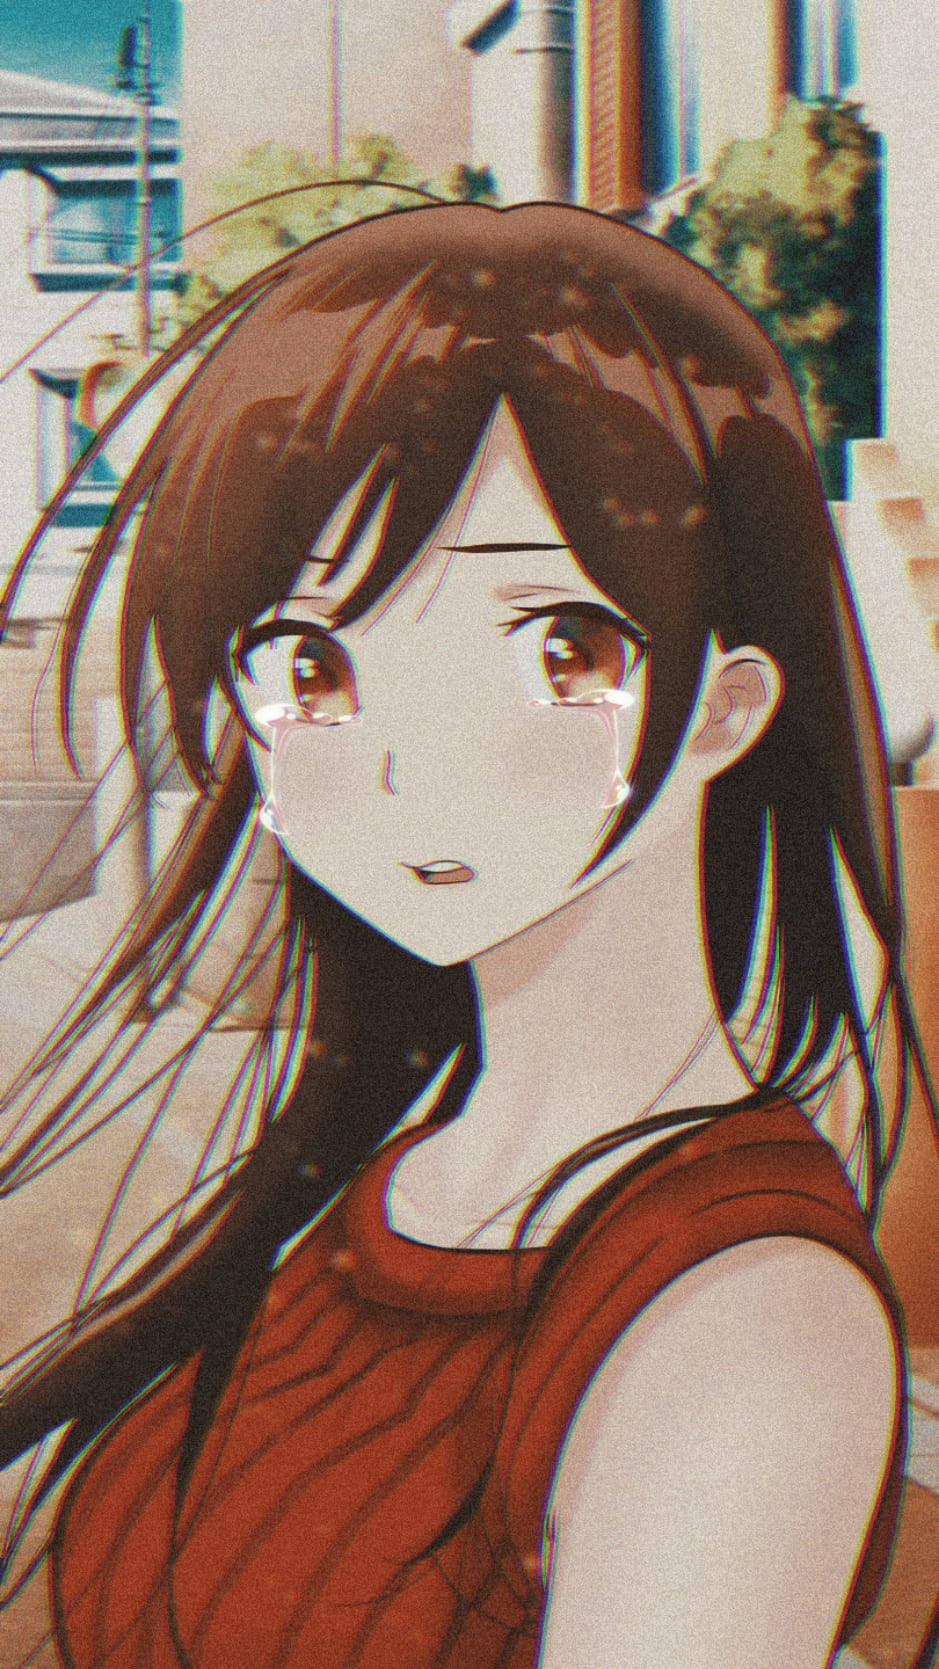 Grainy Sad Aesthetic Anime Girl Wallpaper